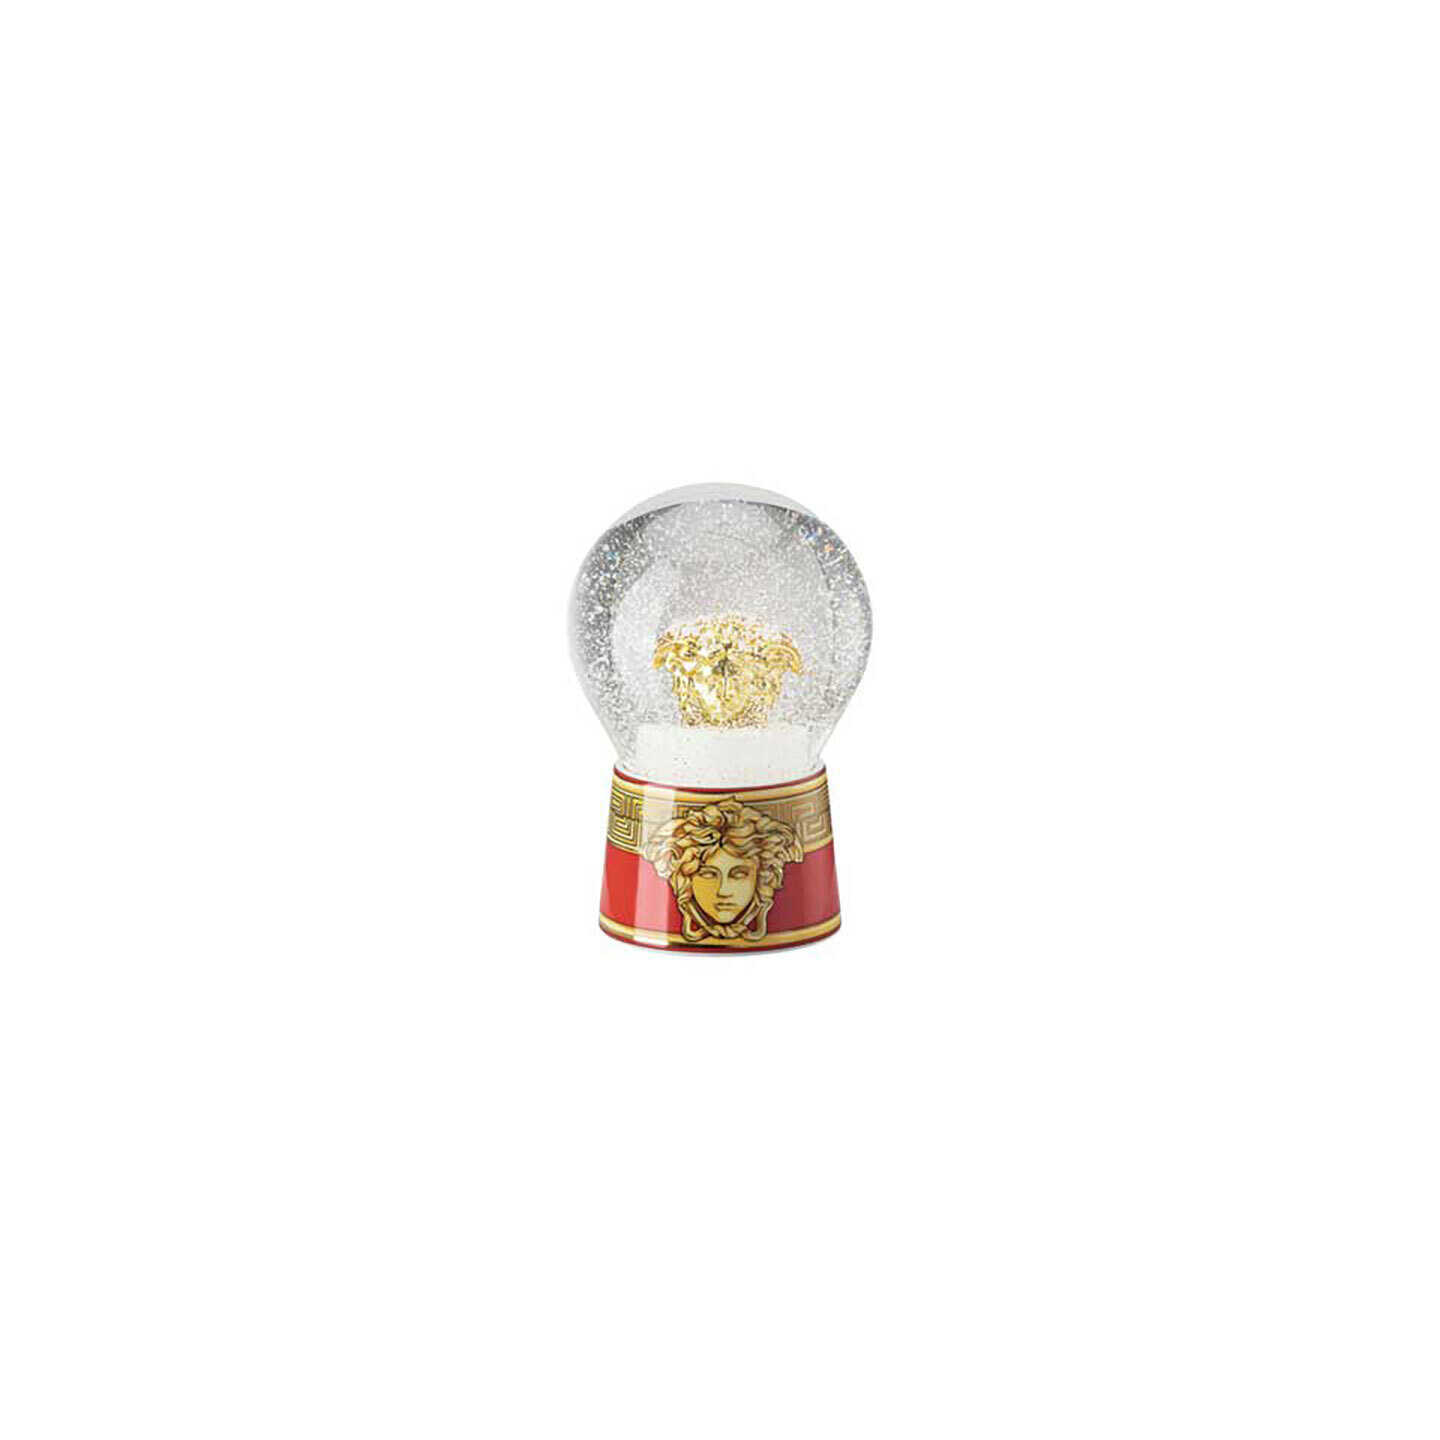 Versace Medusa Amplified Golden Coin Snow Globe